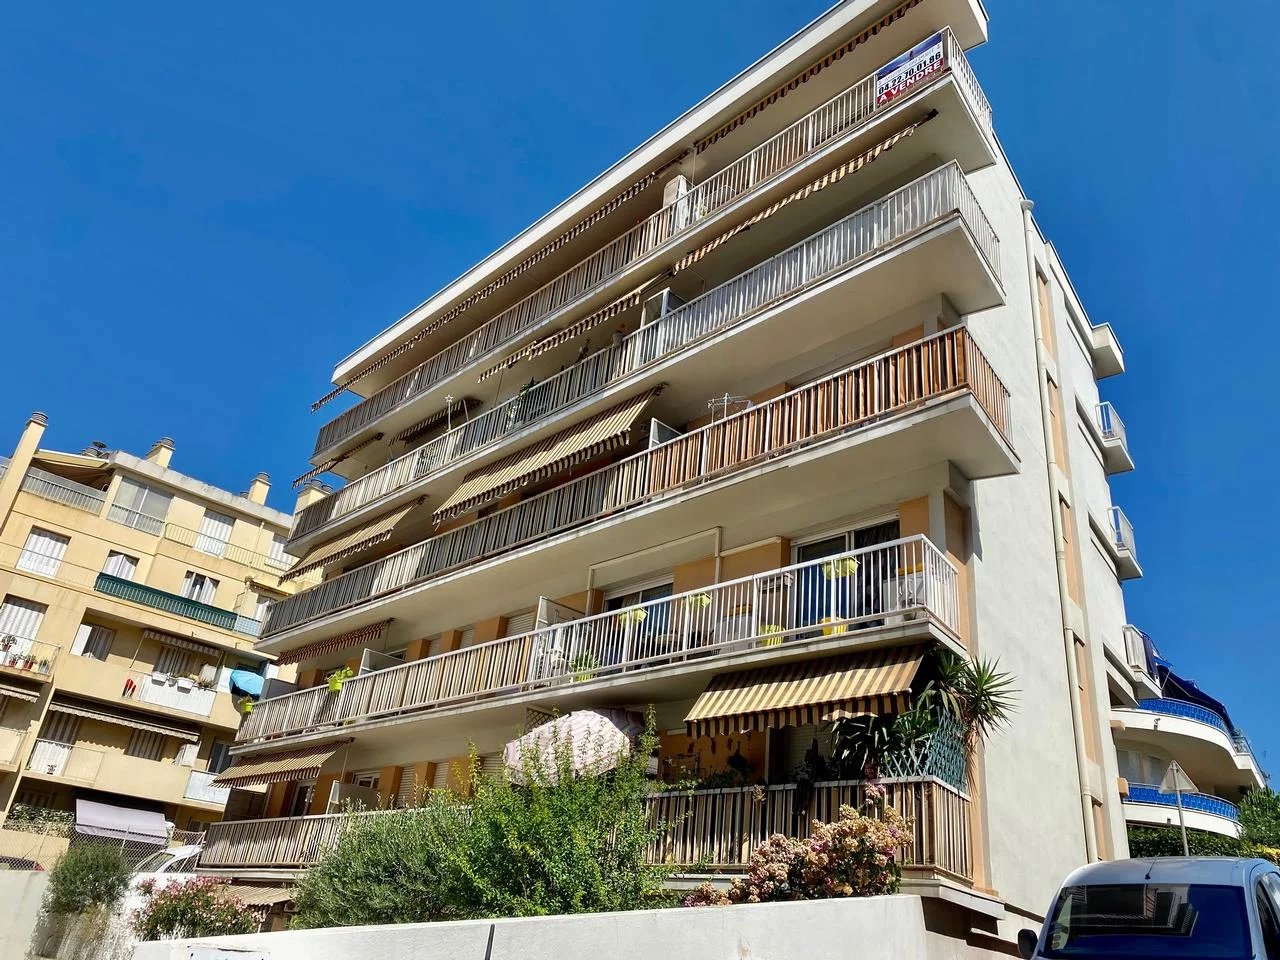 Appartement  3 Locali 61.4m2  In vendita   260 000 €